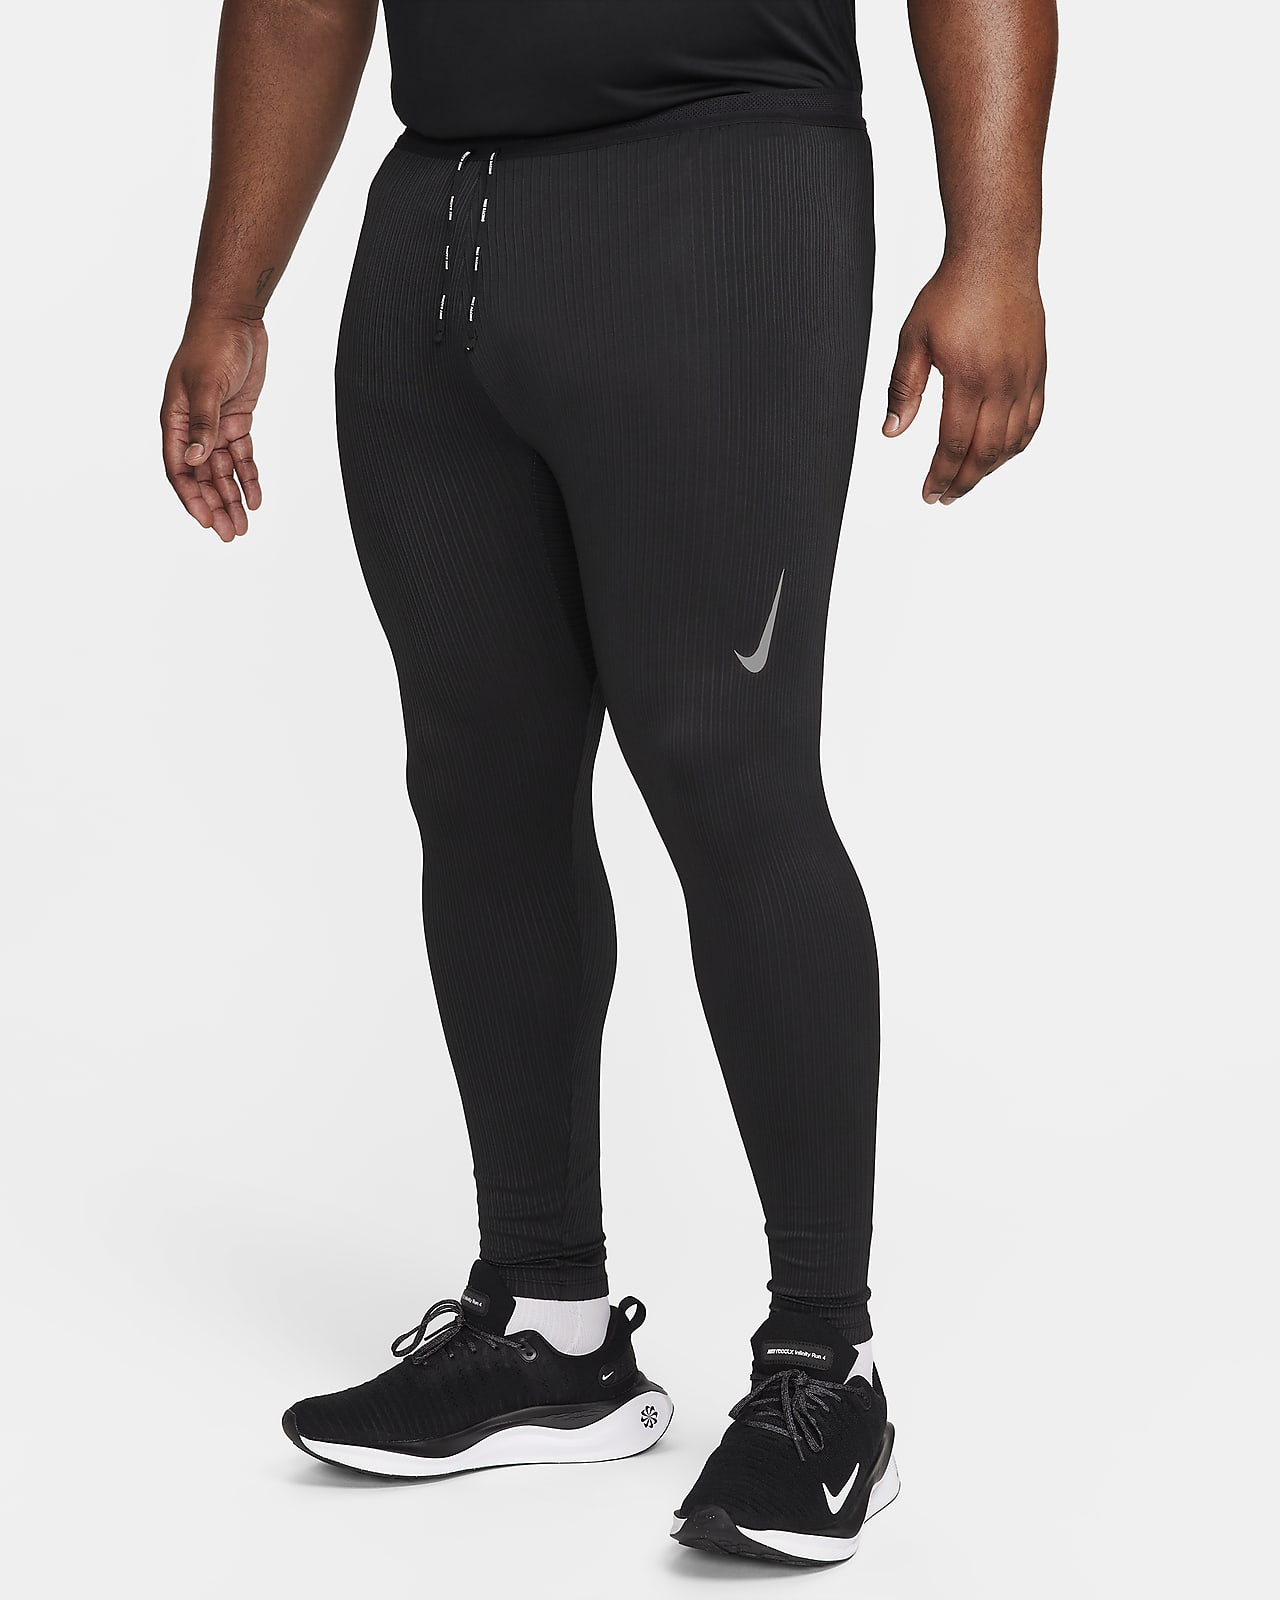 Nike Men's Power Tech Dri-Fit Reflective Running Tights - Black